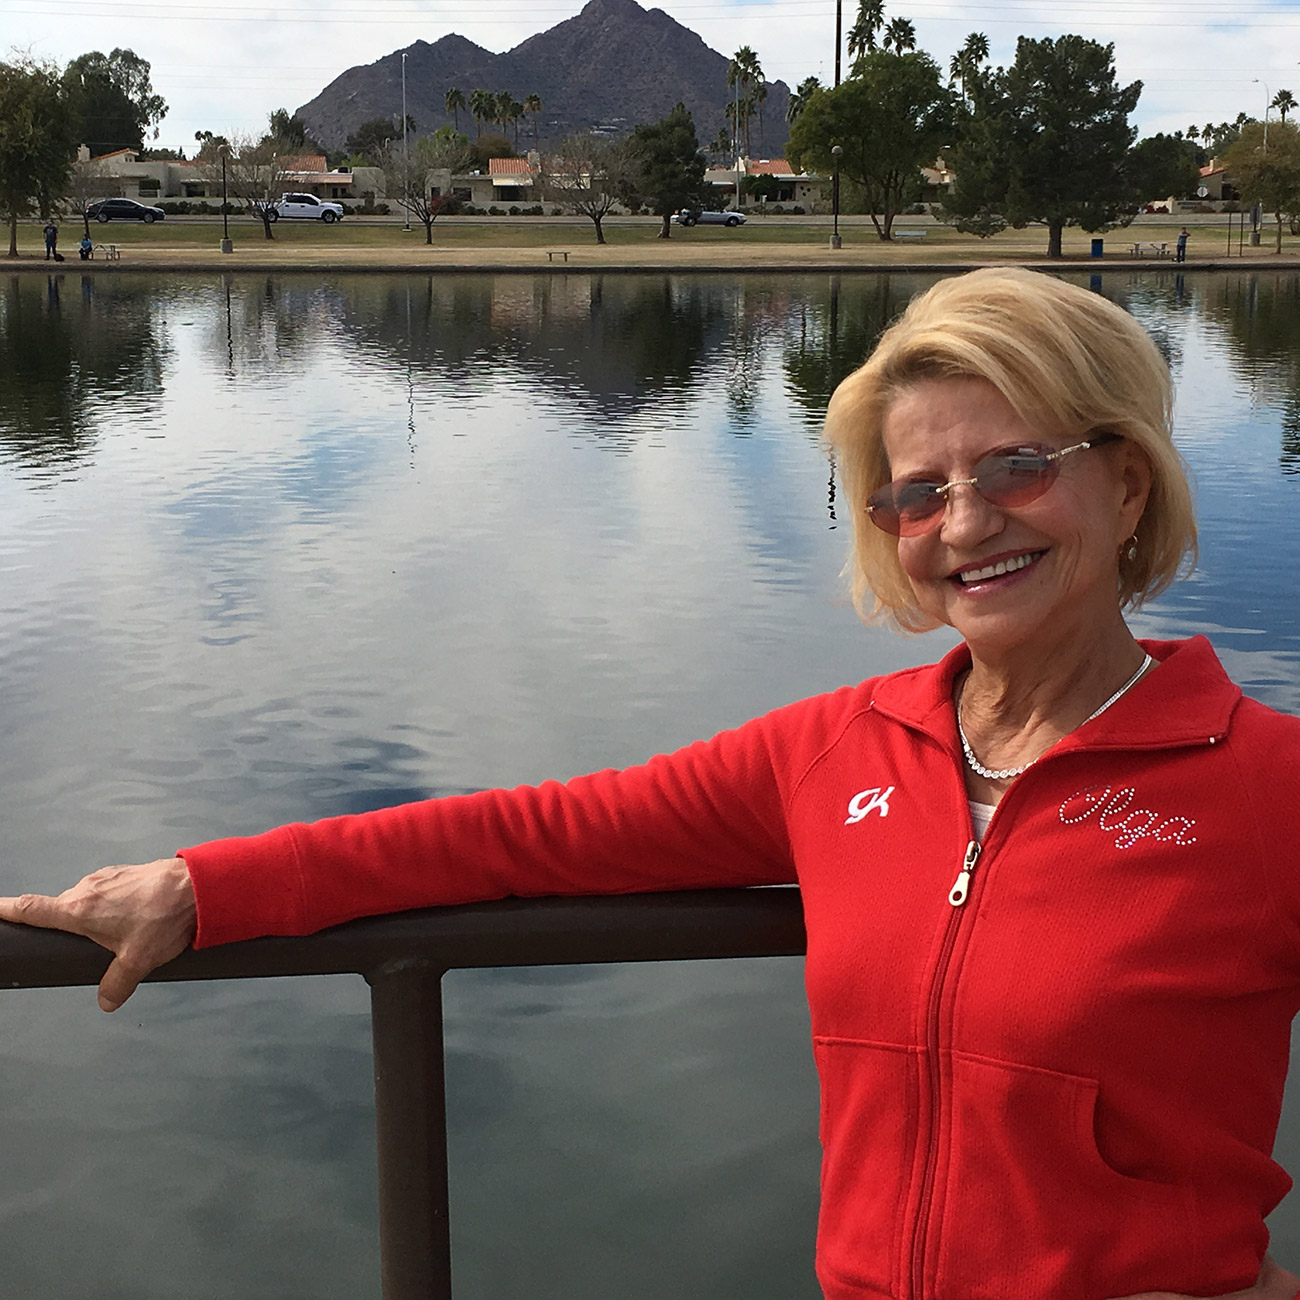 Medalhista de ouro Olga Korbut, 61 anos, vive atualmente no Arizona (Foto: AP)